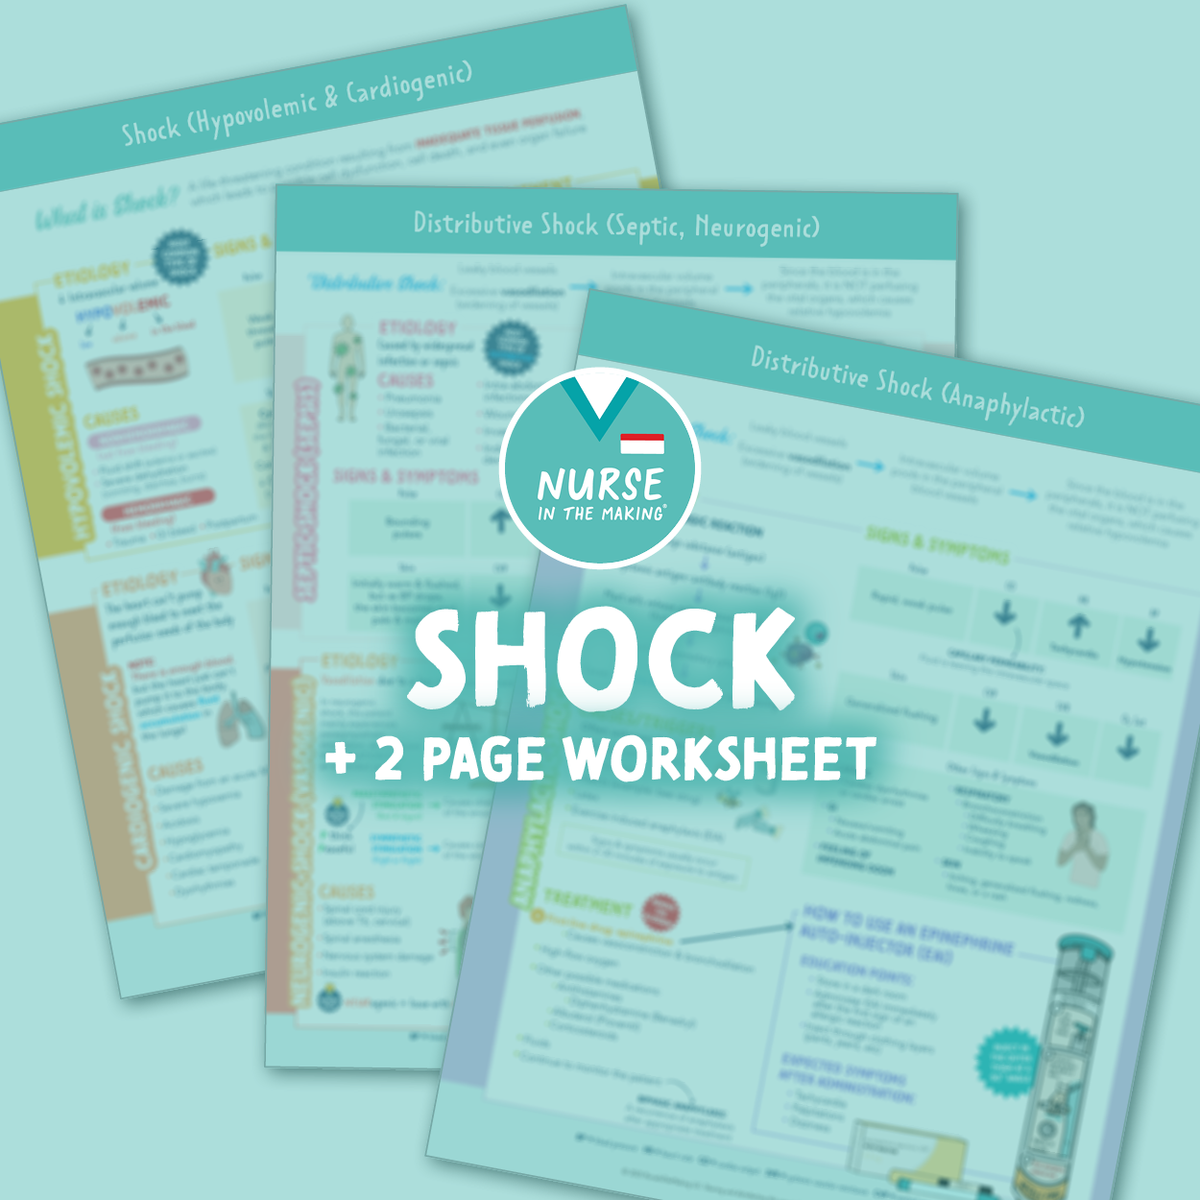 Types of Shock Study Guide + Worksheet